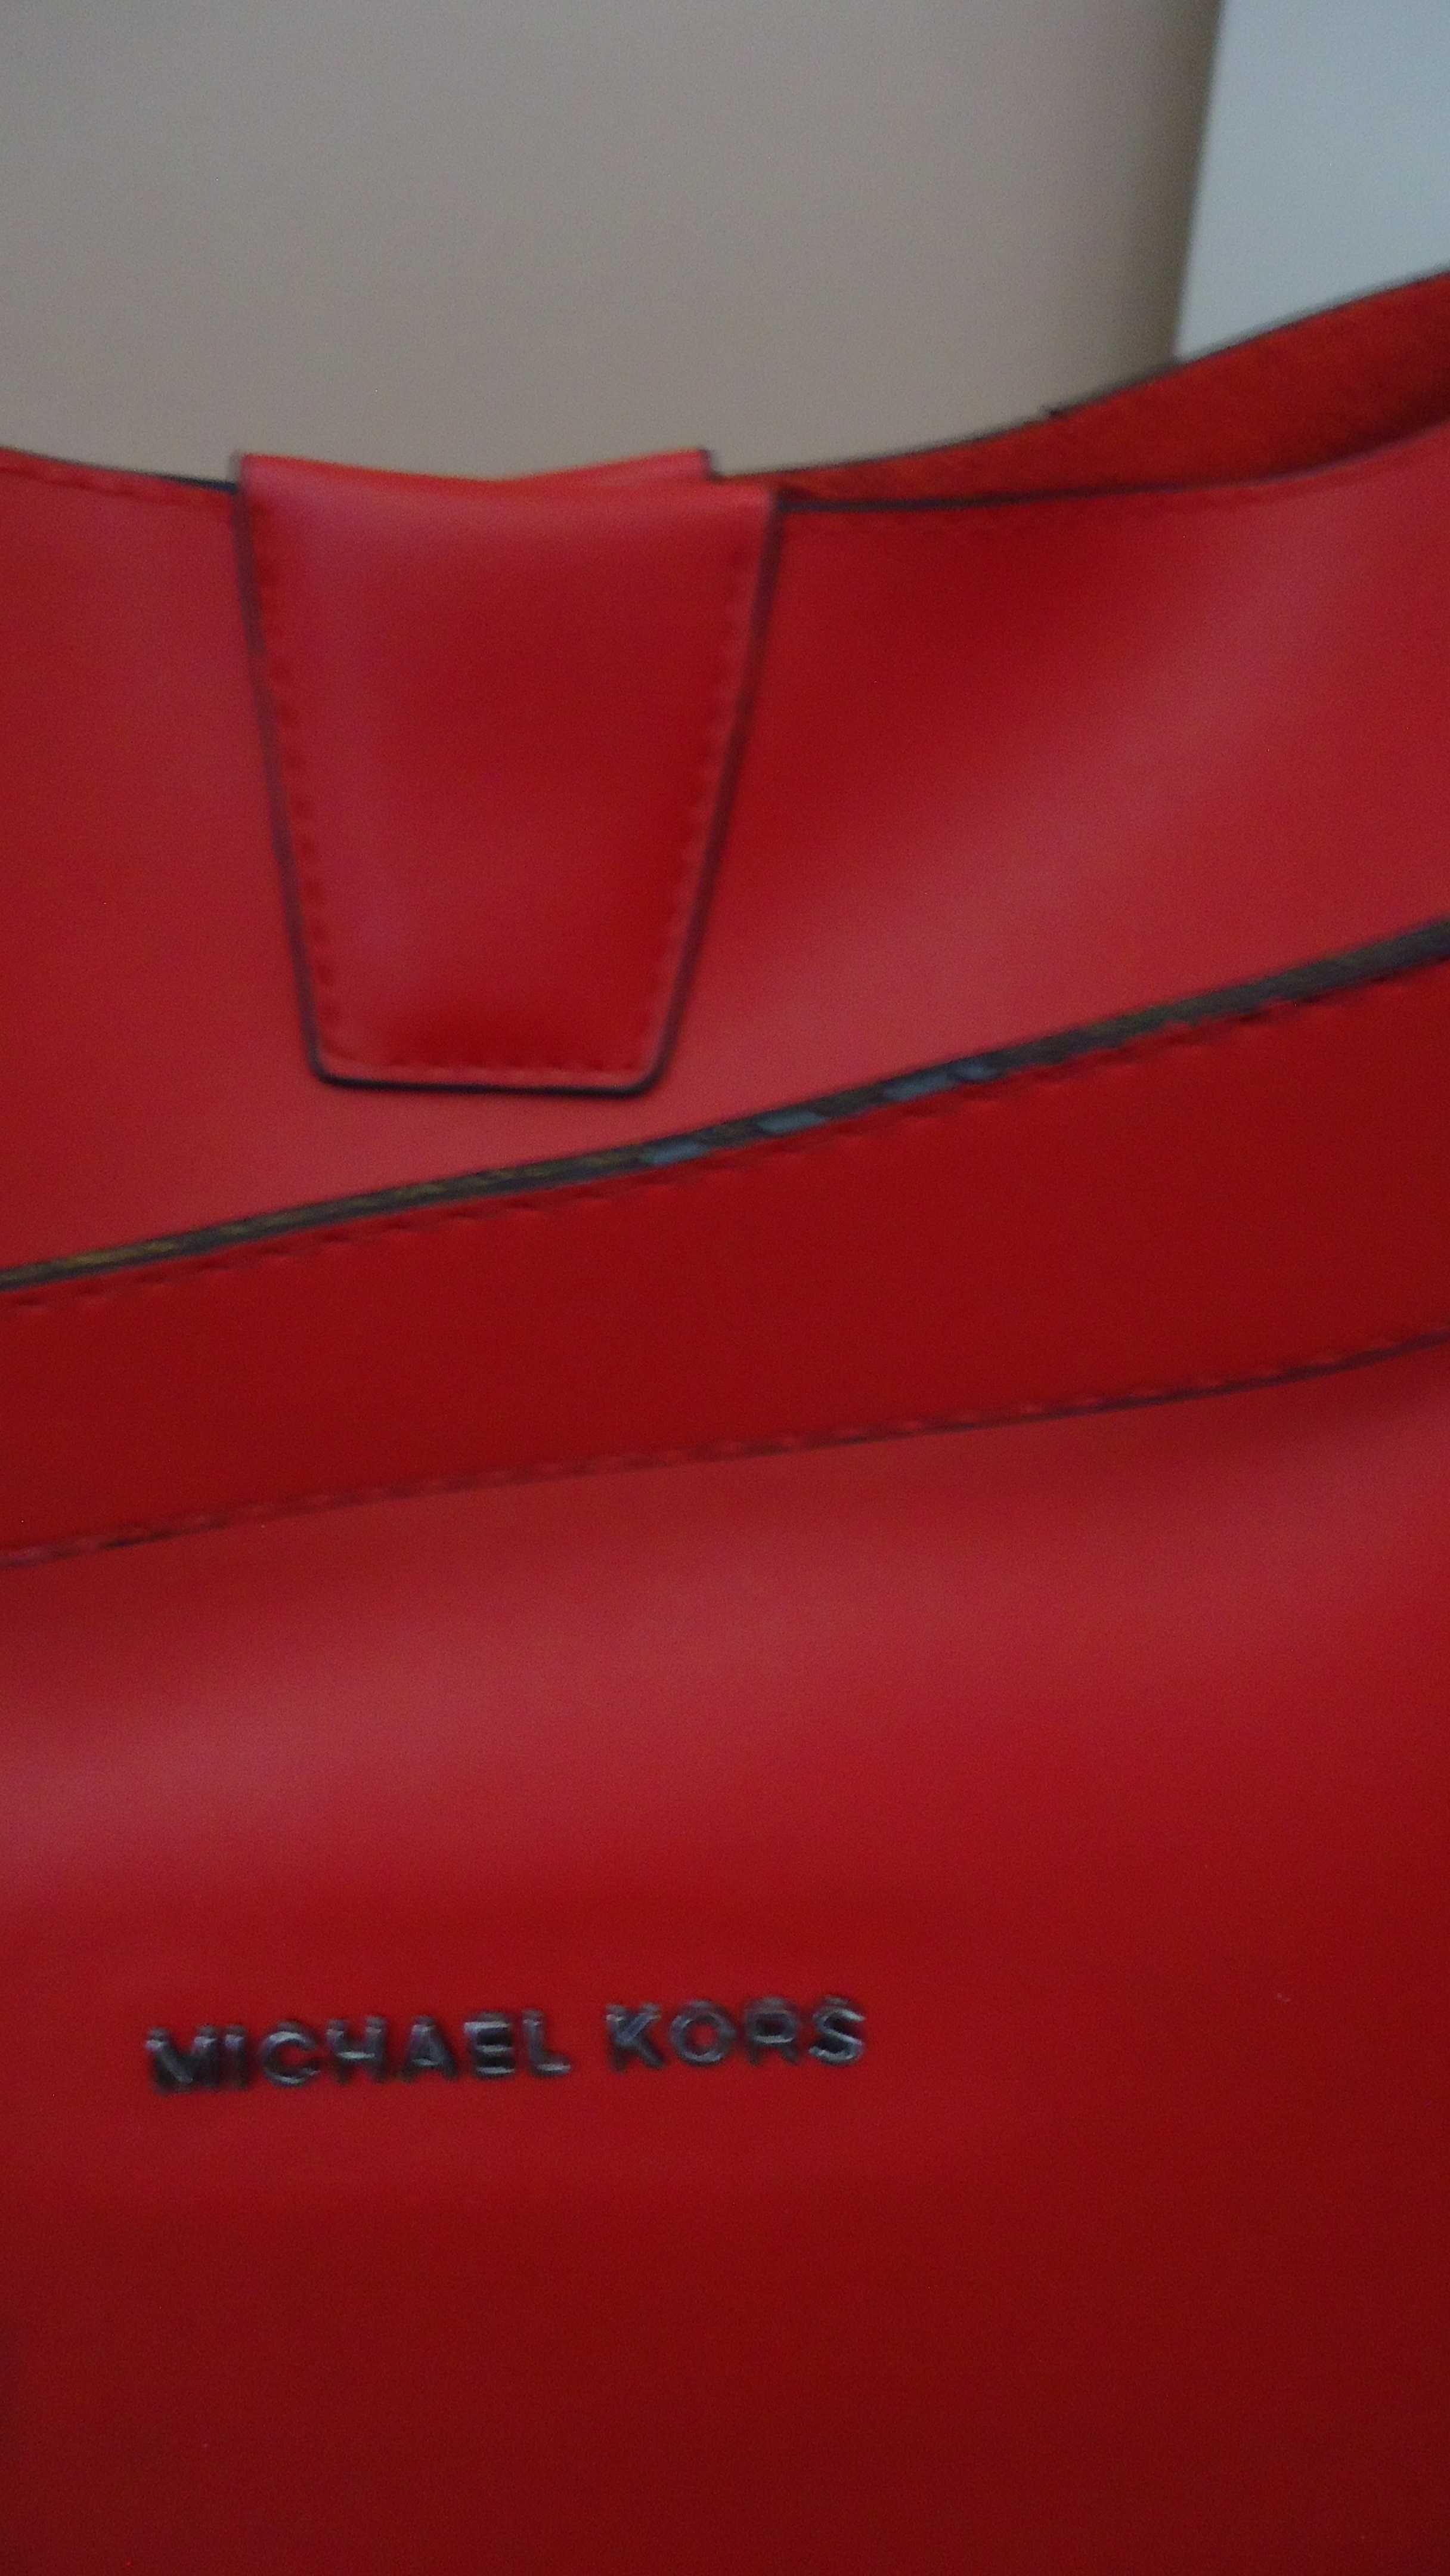 czerwona torebka MICHAELS KORS shoperka czerwona torebka skórzana